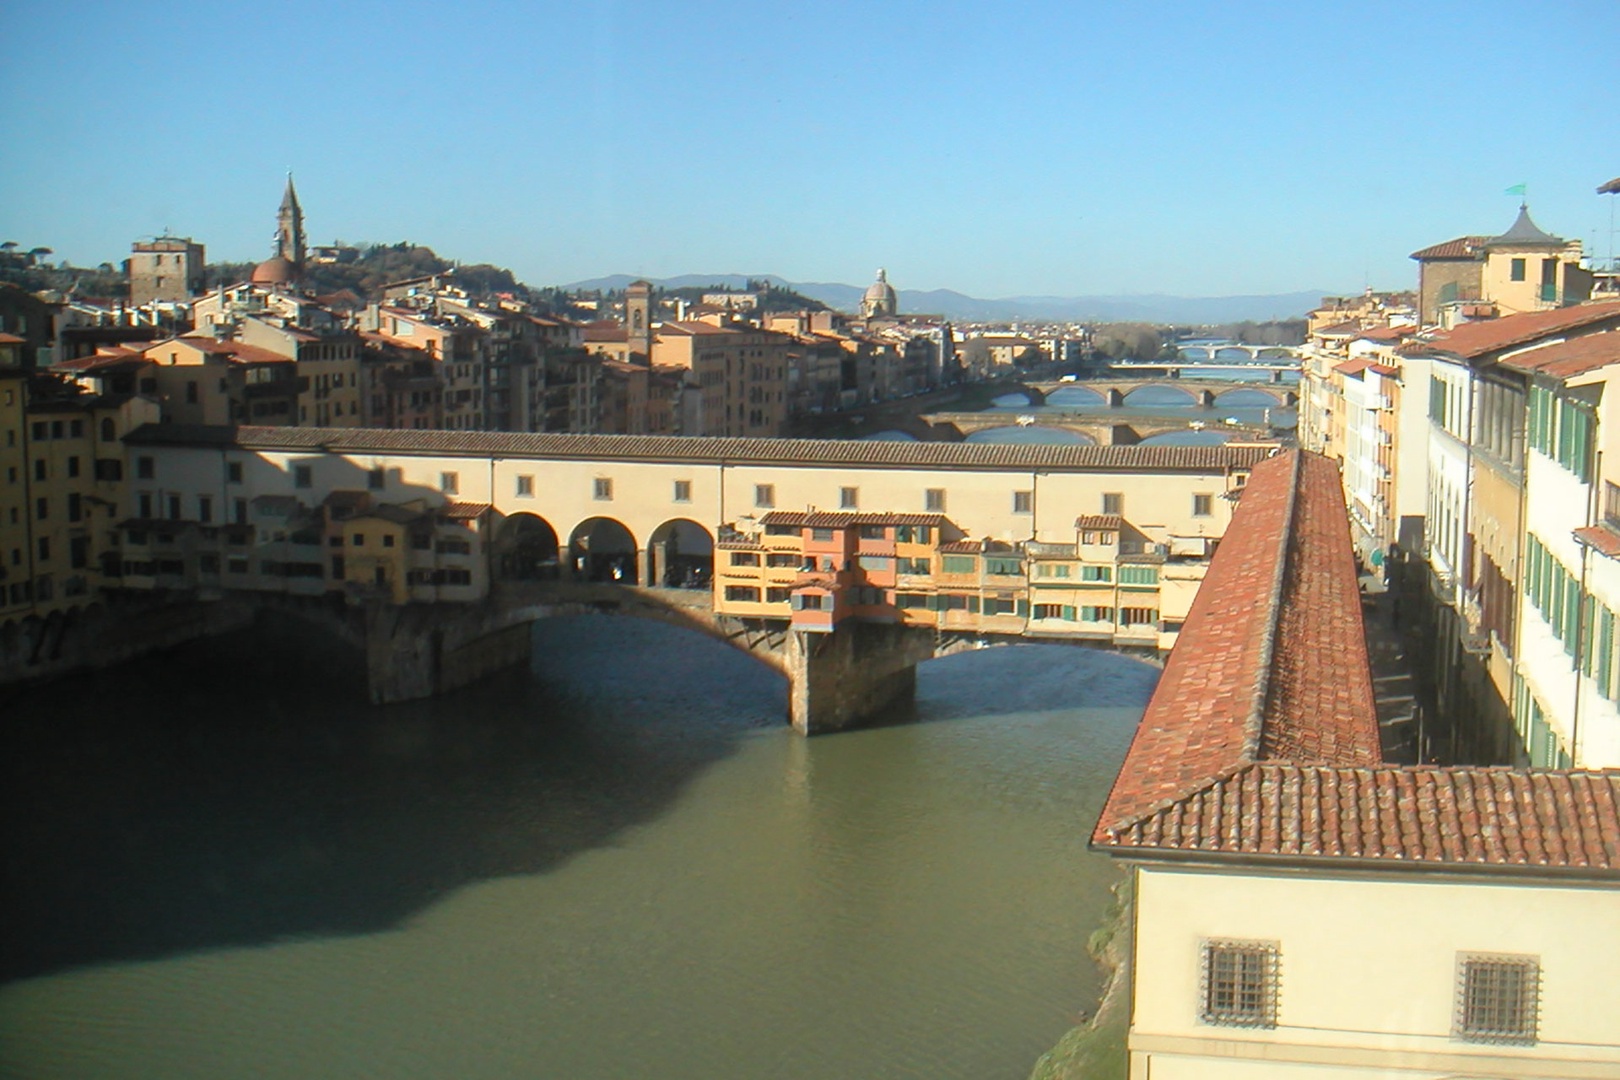 Another view of the picturesque Ponte Vecchio bridge near the Casetta.